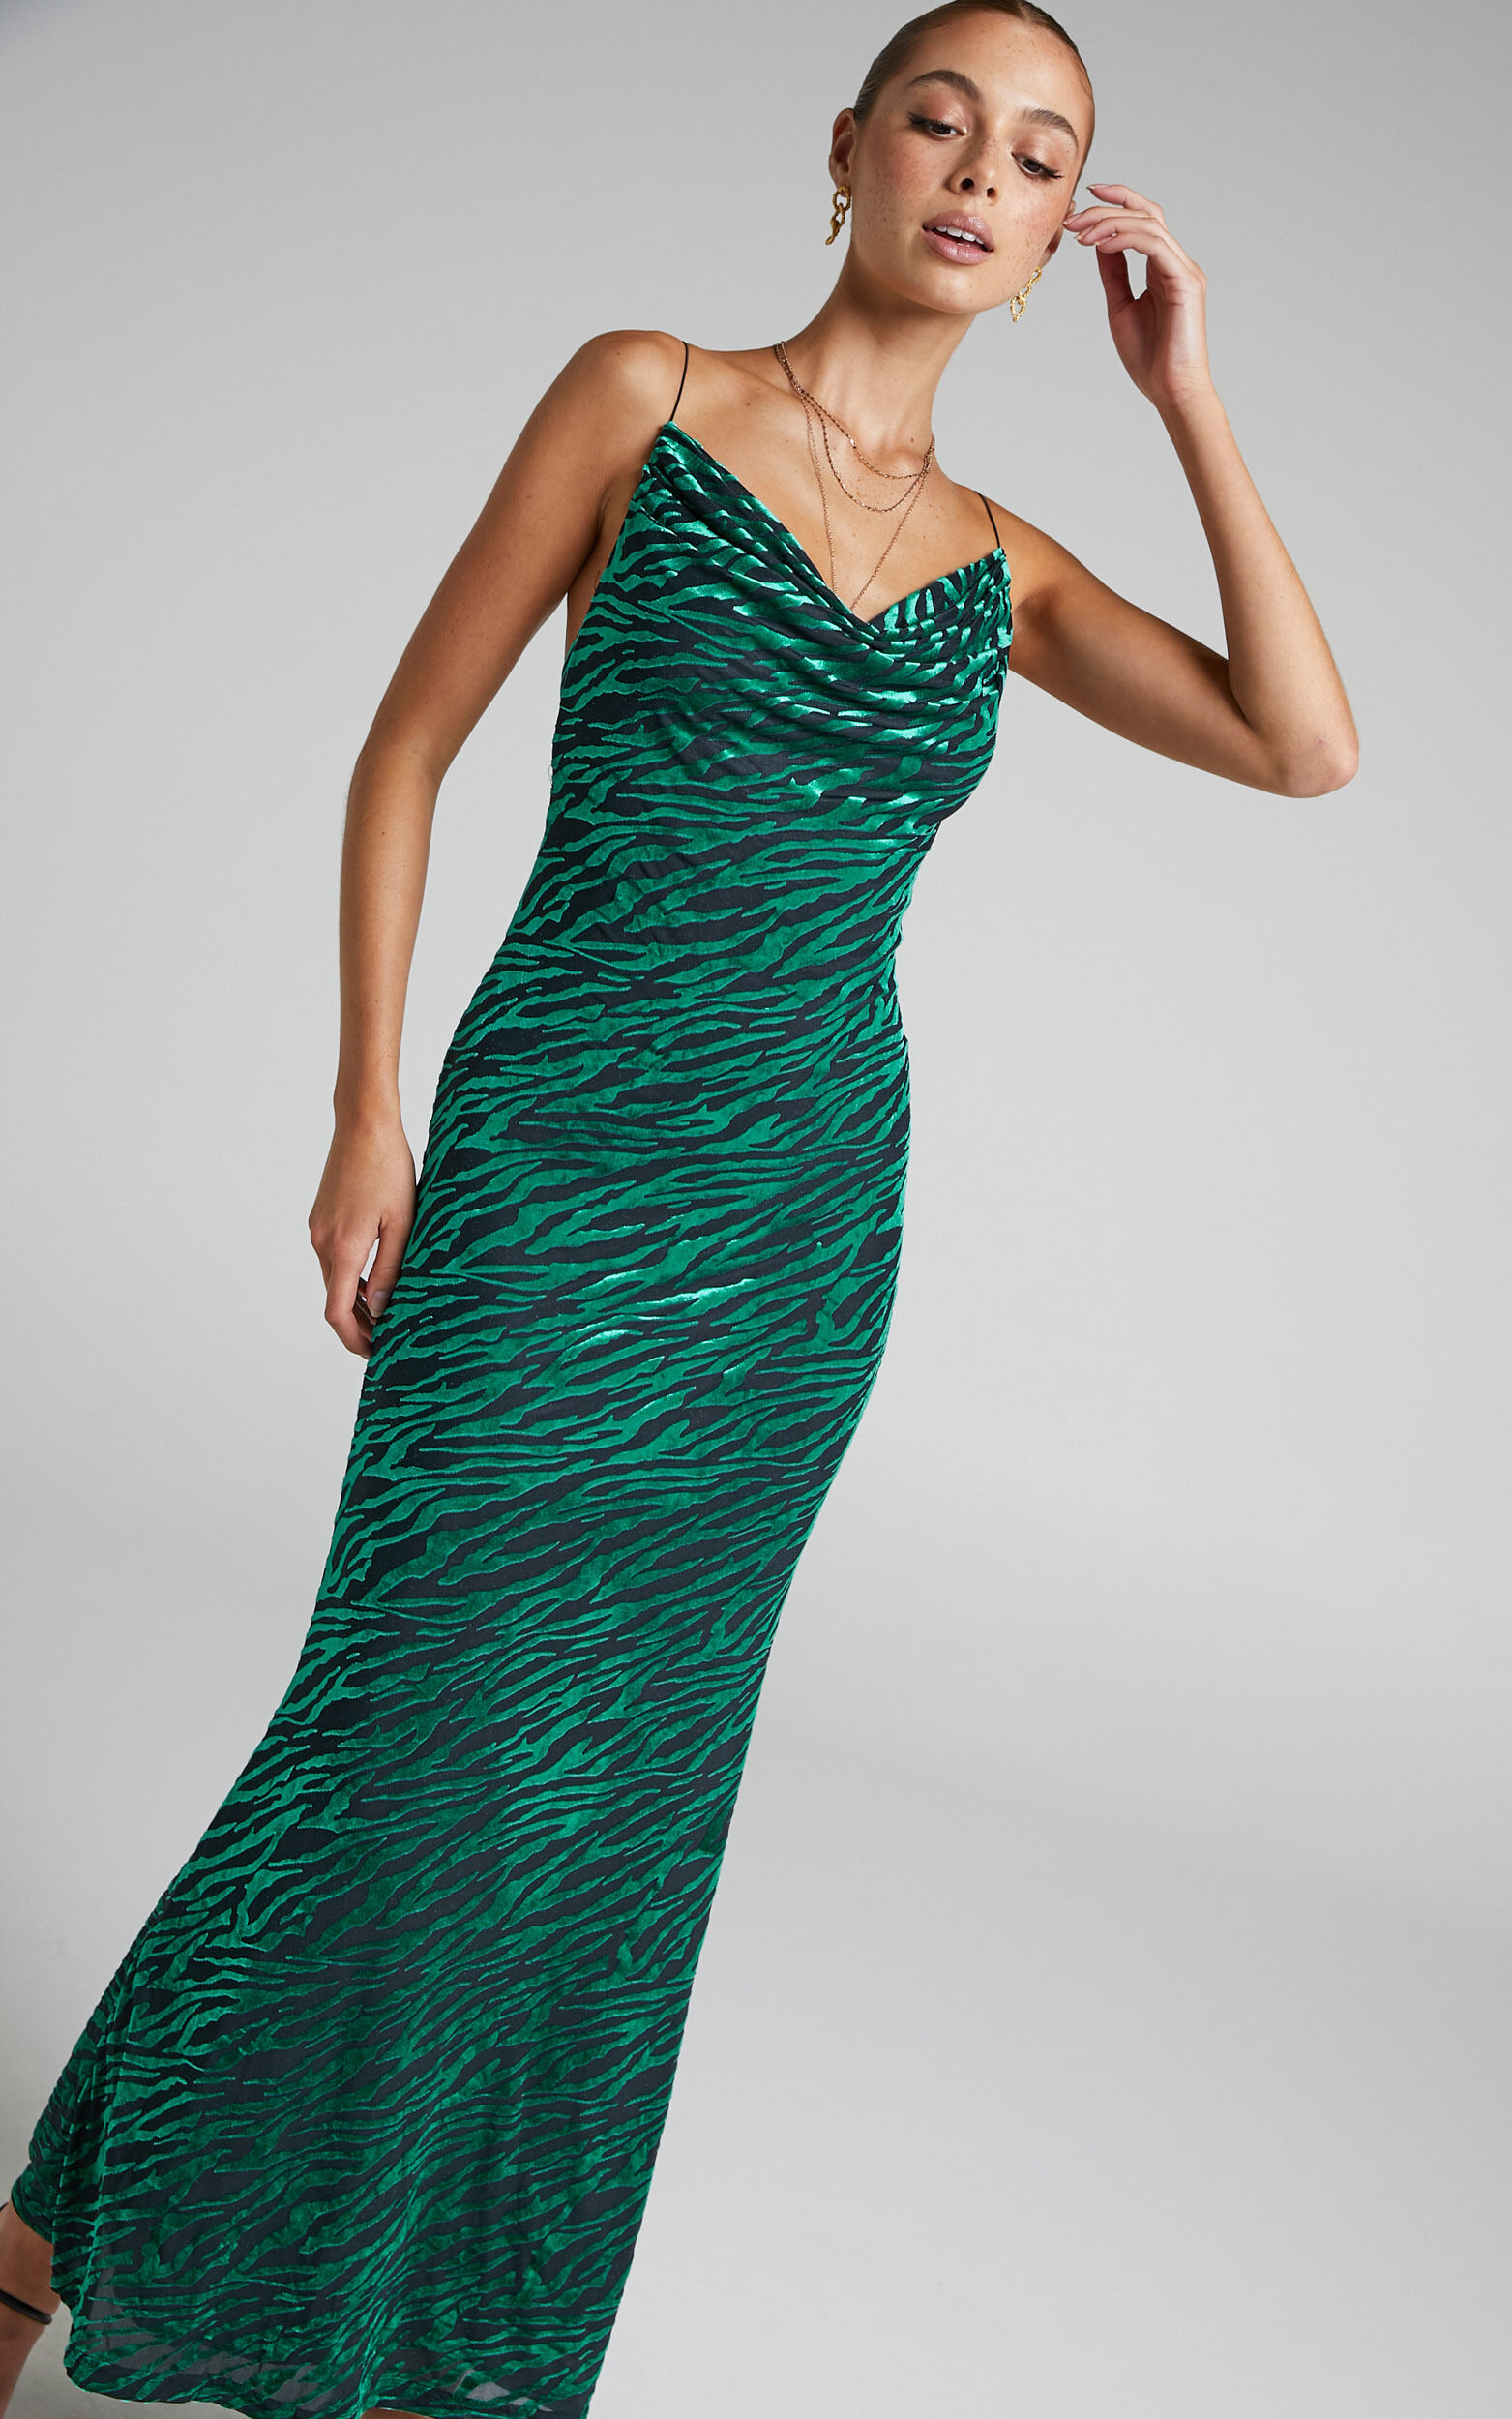 Runaway The Label - Lionell Dress in Emerald Zebra - L, GRN2, super-hi-res image number null